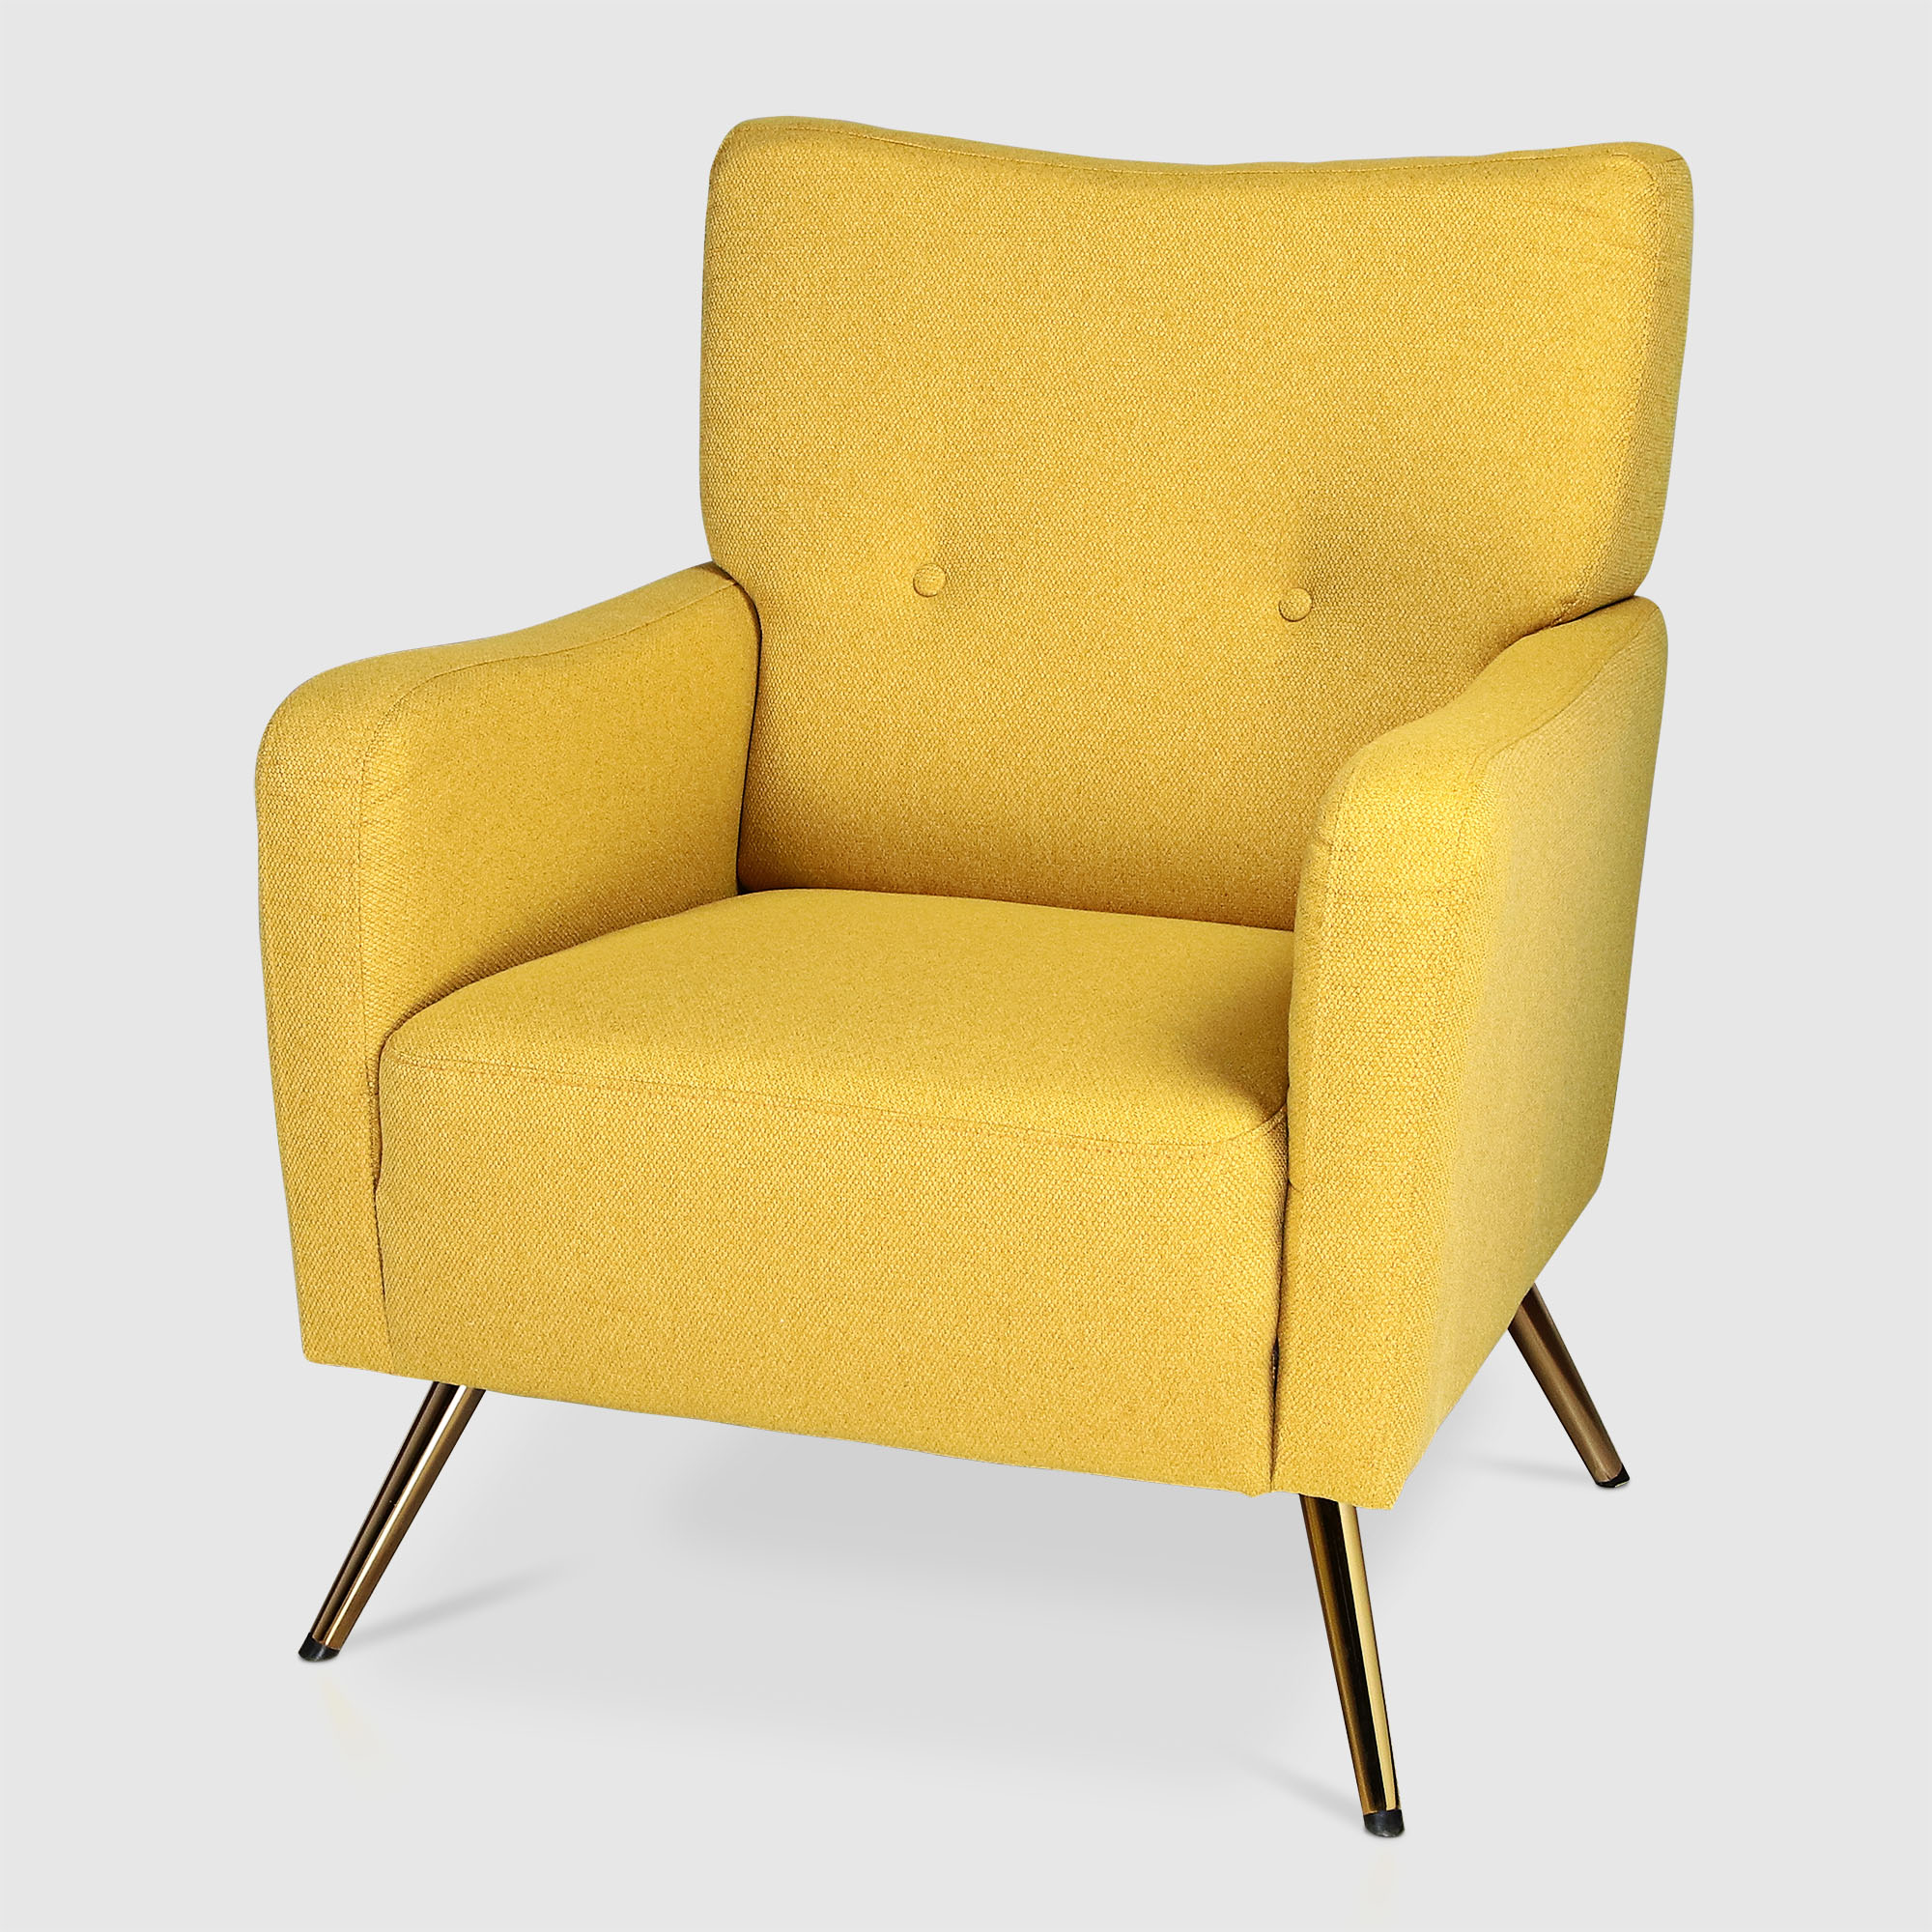 Кресло Liyasi Фиби желтое 73х72х88 см кресло liyasi чарли рыжее 80х81х93 см